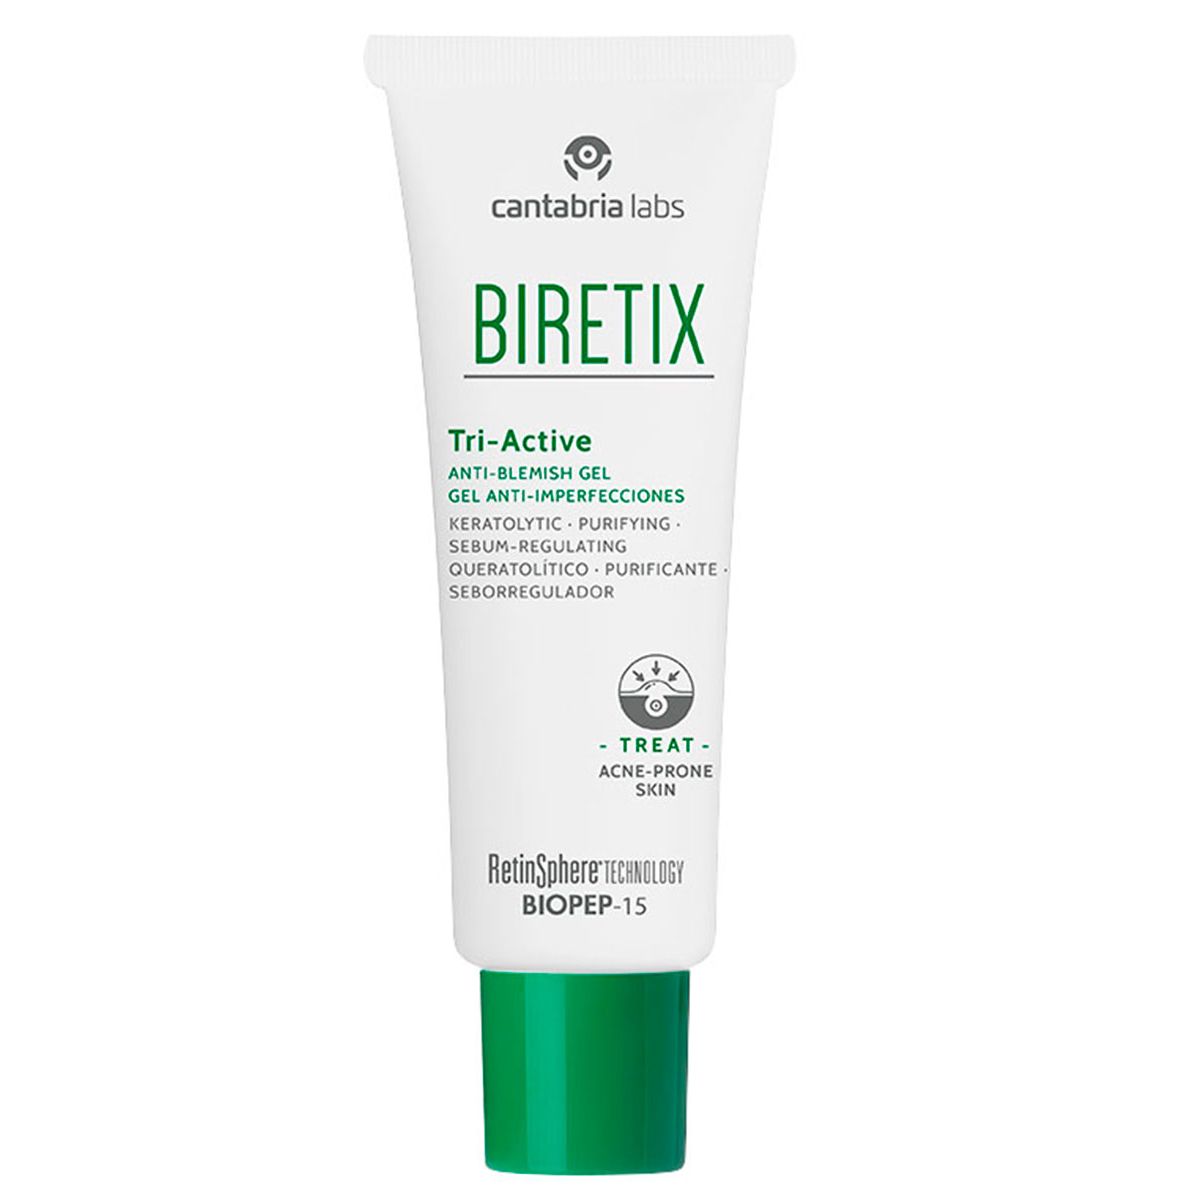 Biretex anti-blemish gel